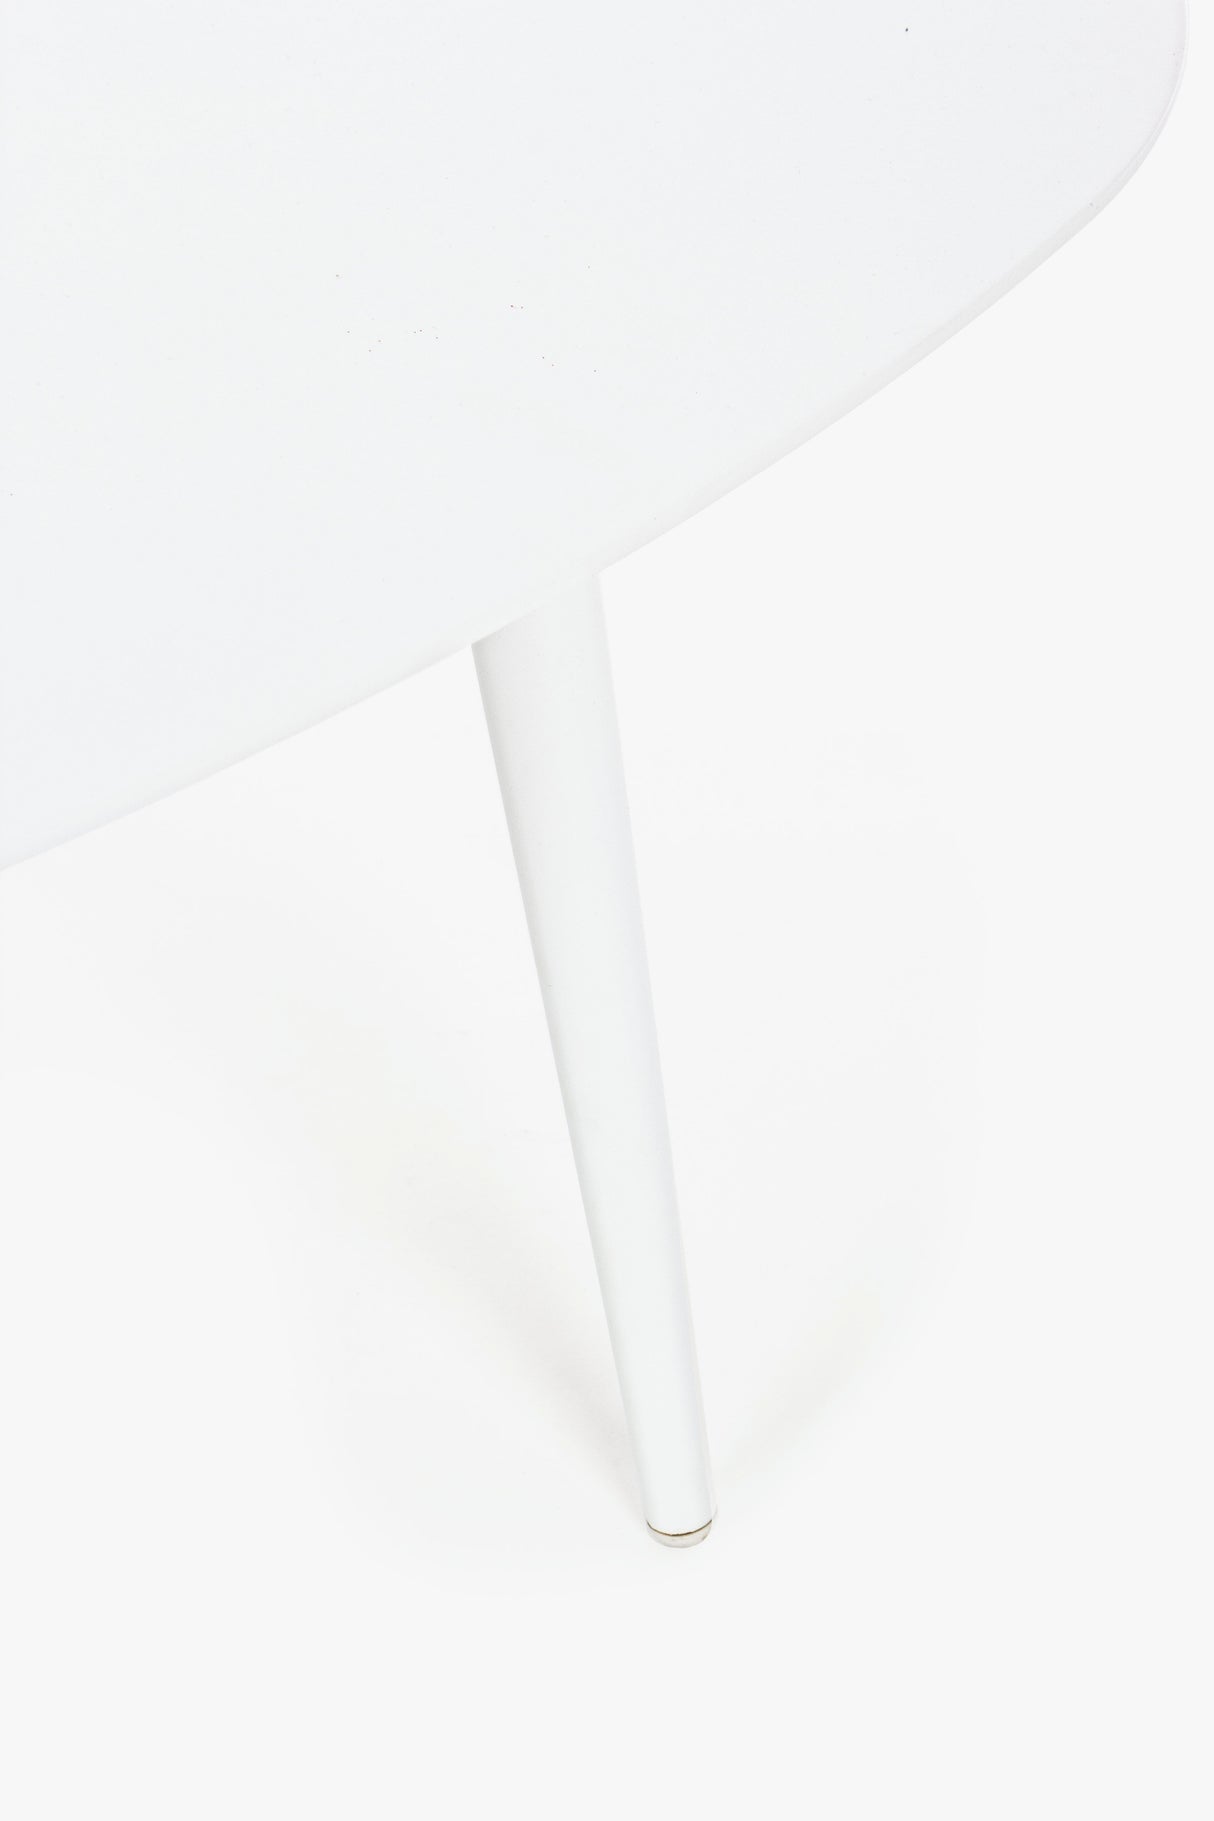 immagine-4-bizzotto-tavolino-ridley-120-x-75-cm-bianco